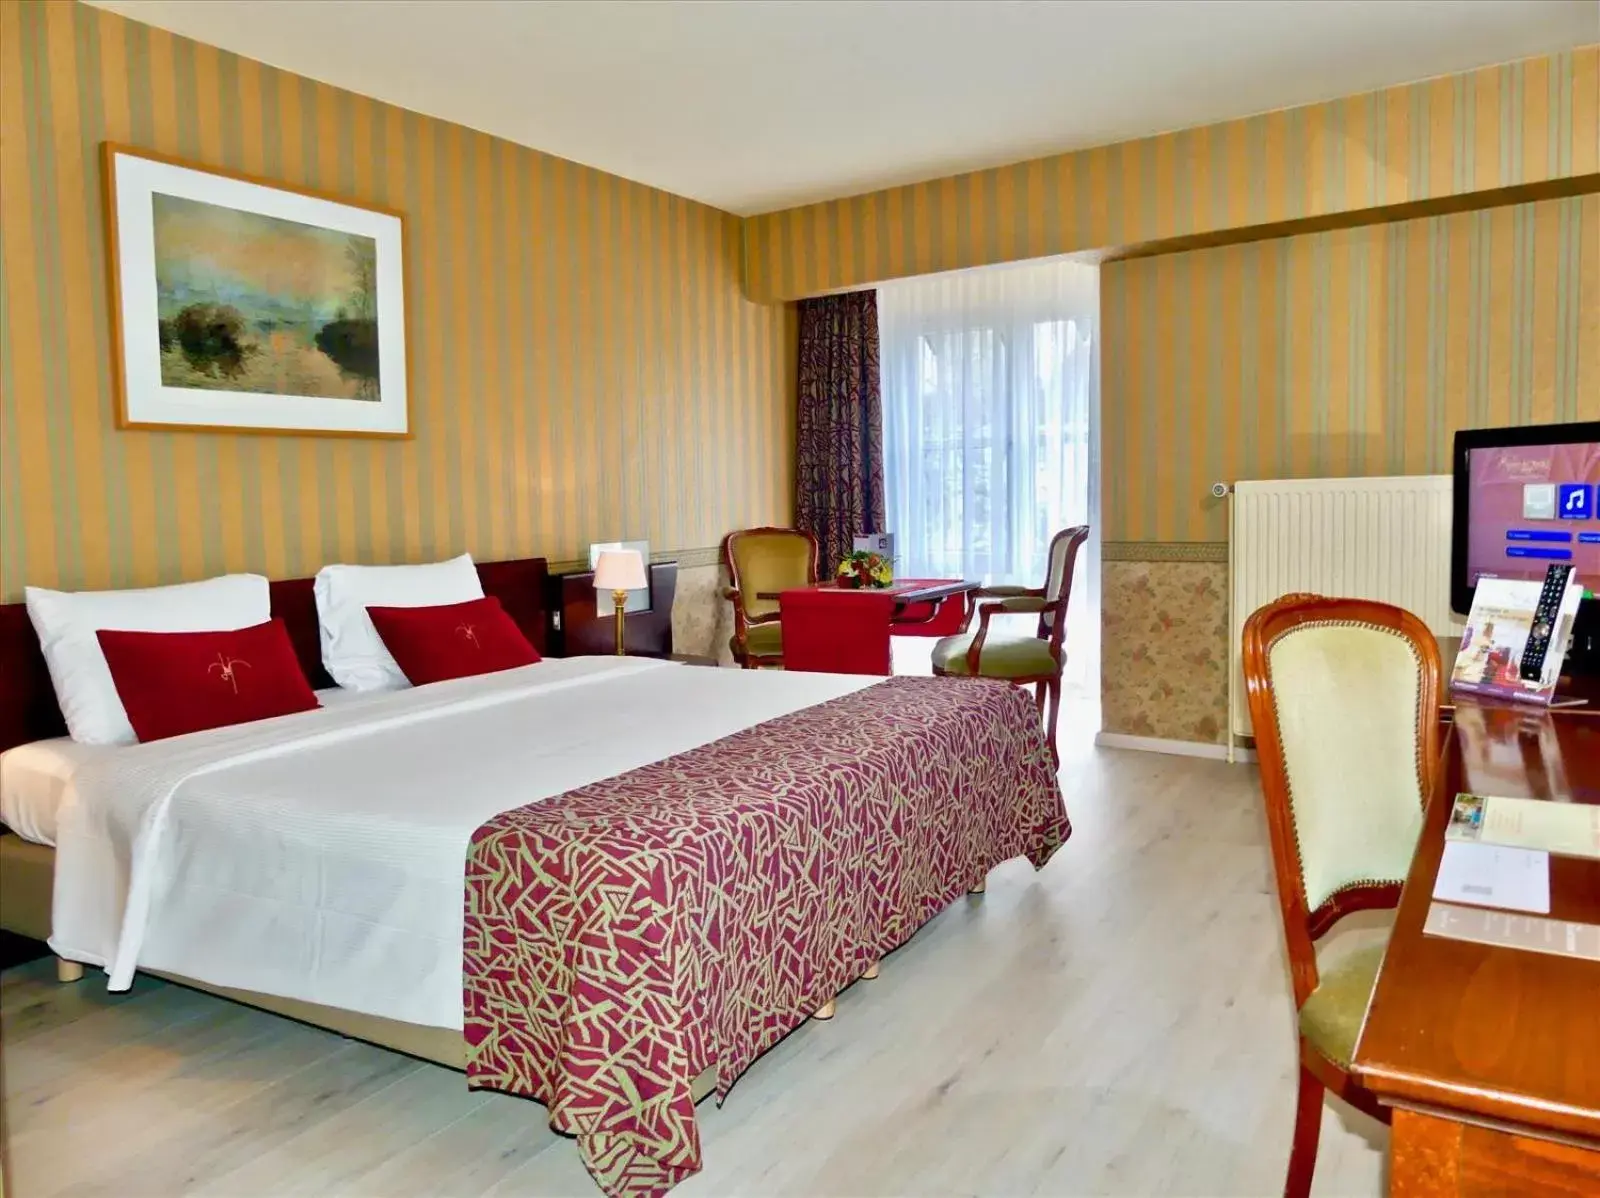 Photo of the whole room in Golden Tulip Hotel de’ Medici